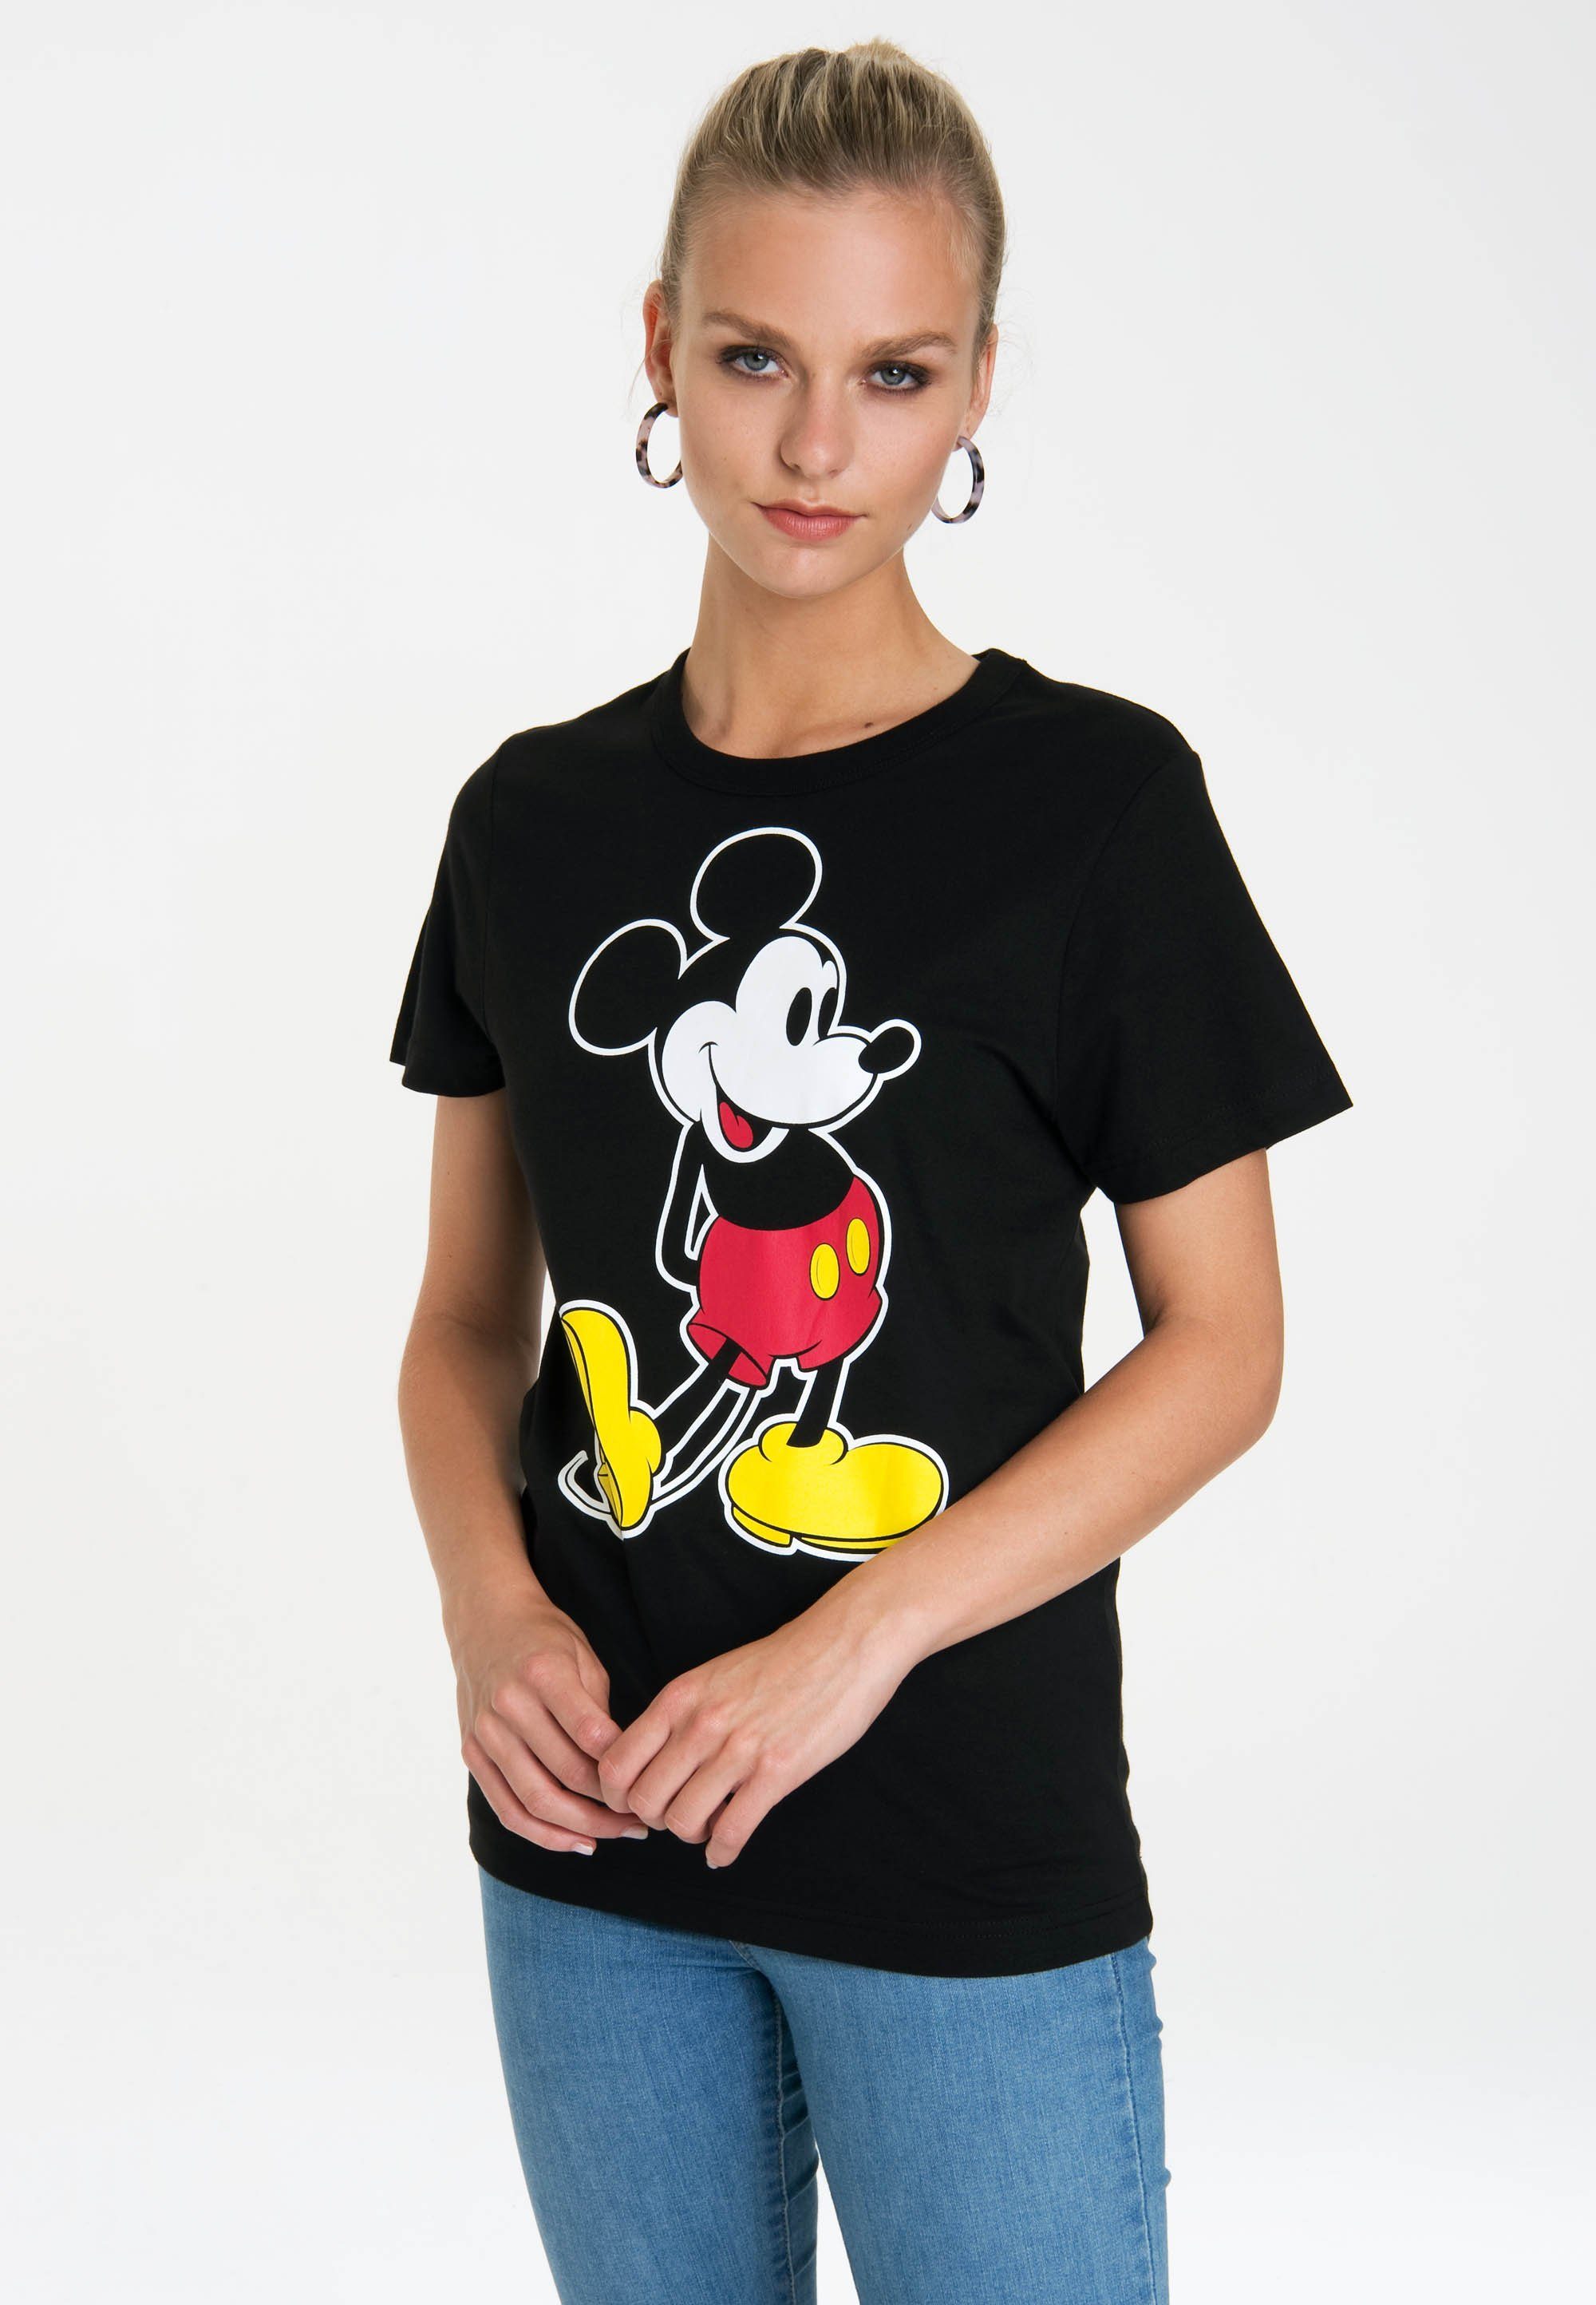 Originaldesign – Mouse Mickey LOGOSHIRT lizenziertem mit T-Shirt Classic